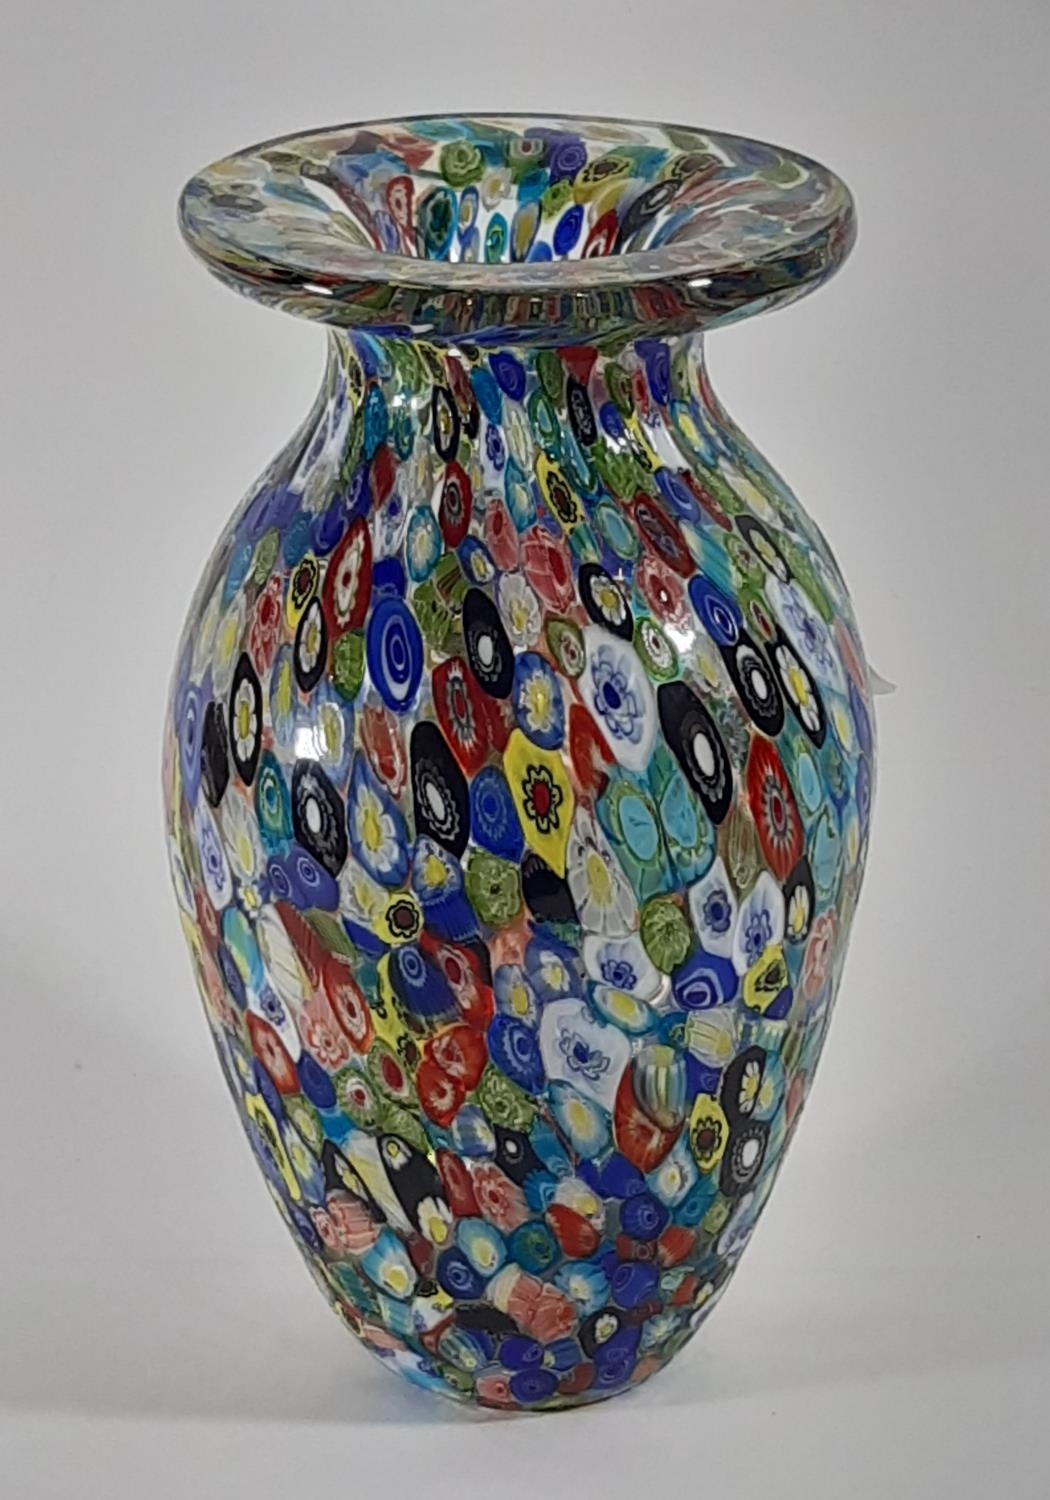 An Italian Art Glass millefiori vase, 30cm tall.